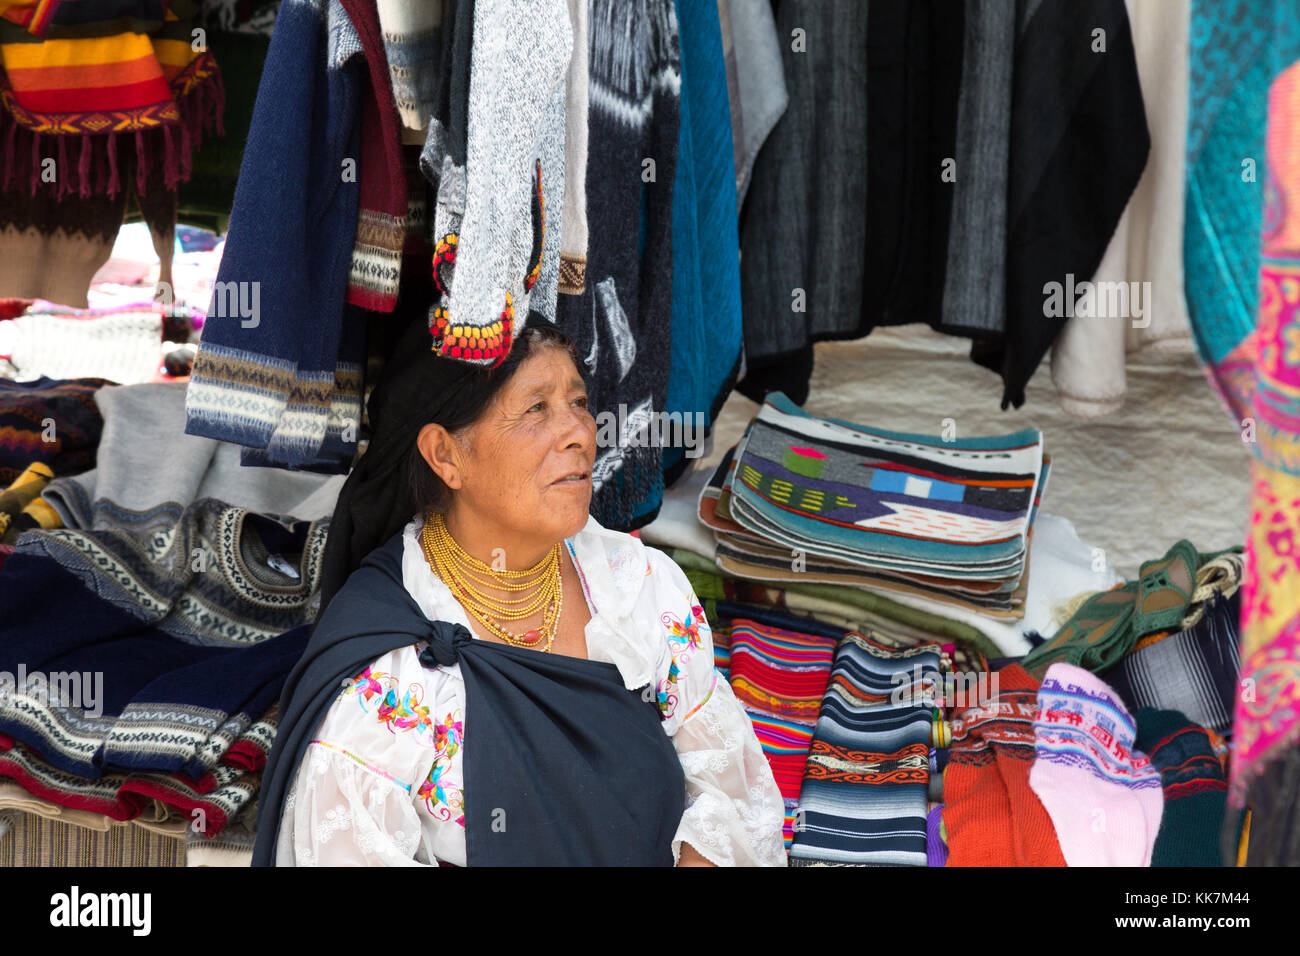 Otavalo market, Ecuador - an indigenous woman stall holder in traditional costume, Otavalo, Ecuador, South America Stock Photo